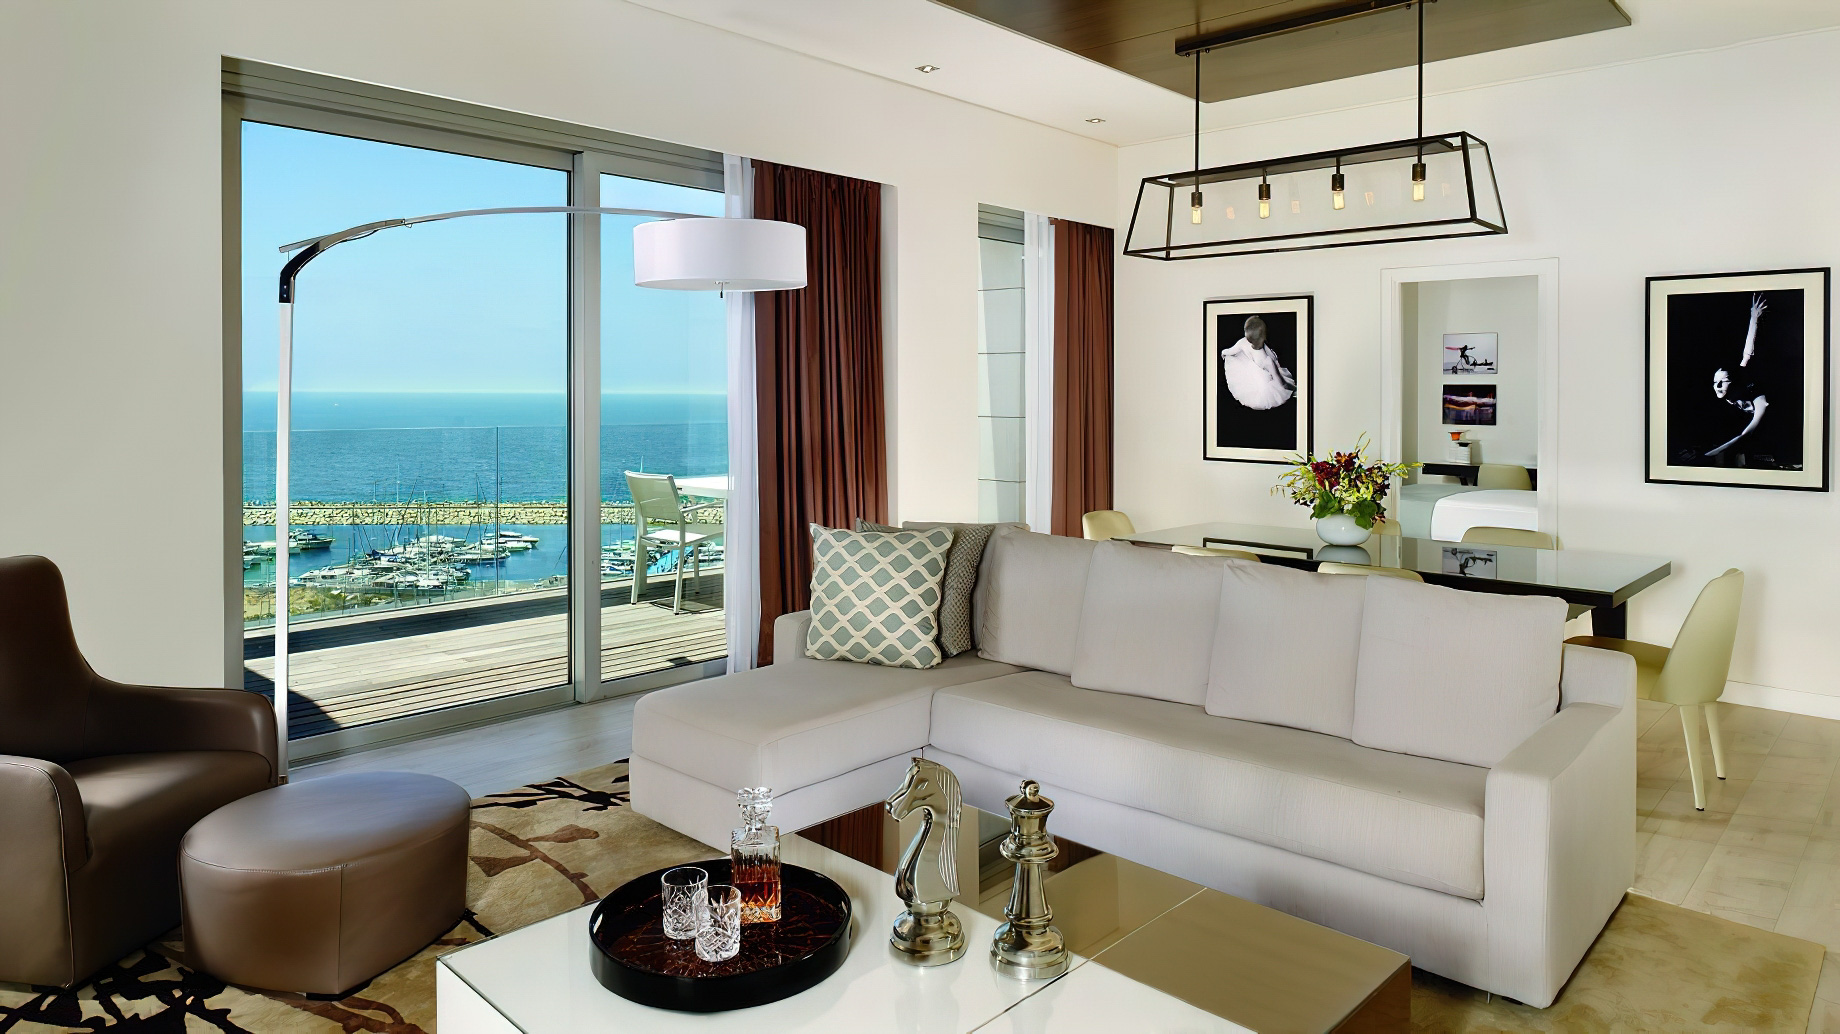 The Ritz-Carlton, Herzliya Hotel - Herzliya, Israel - Two Bedroom Penthouse Suite